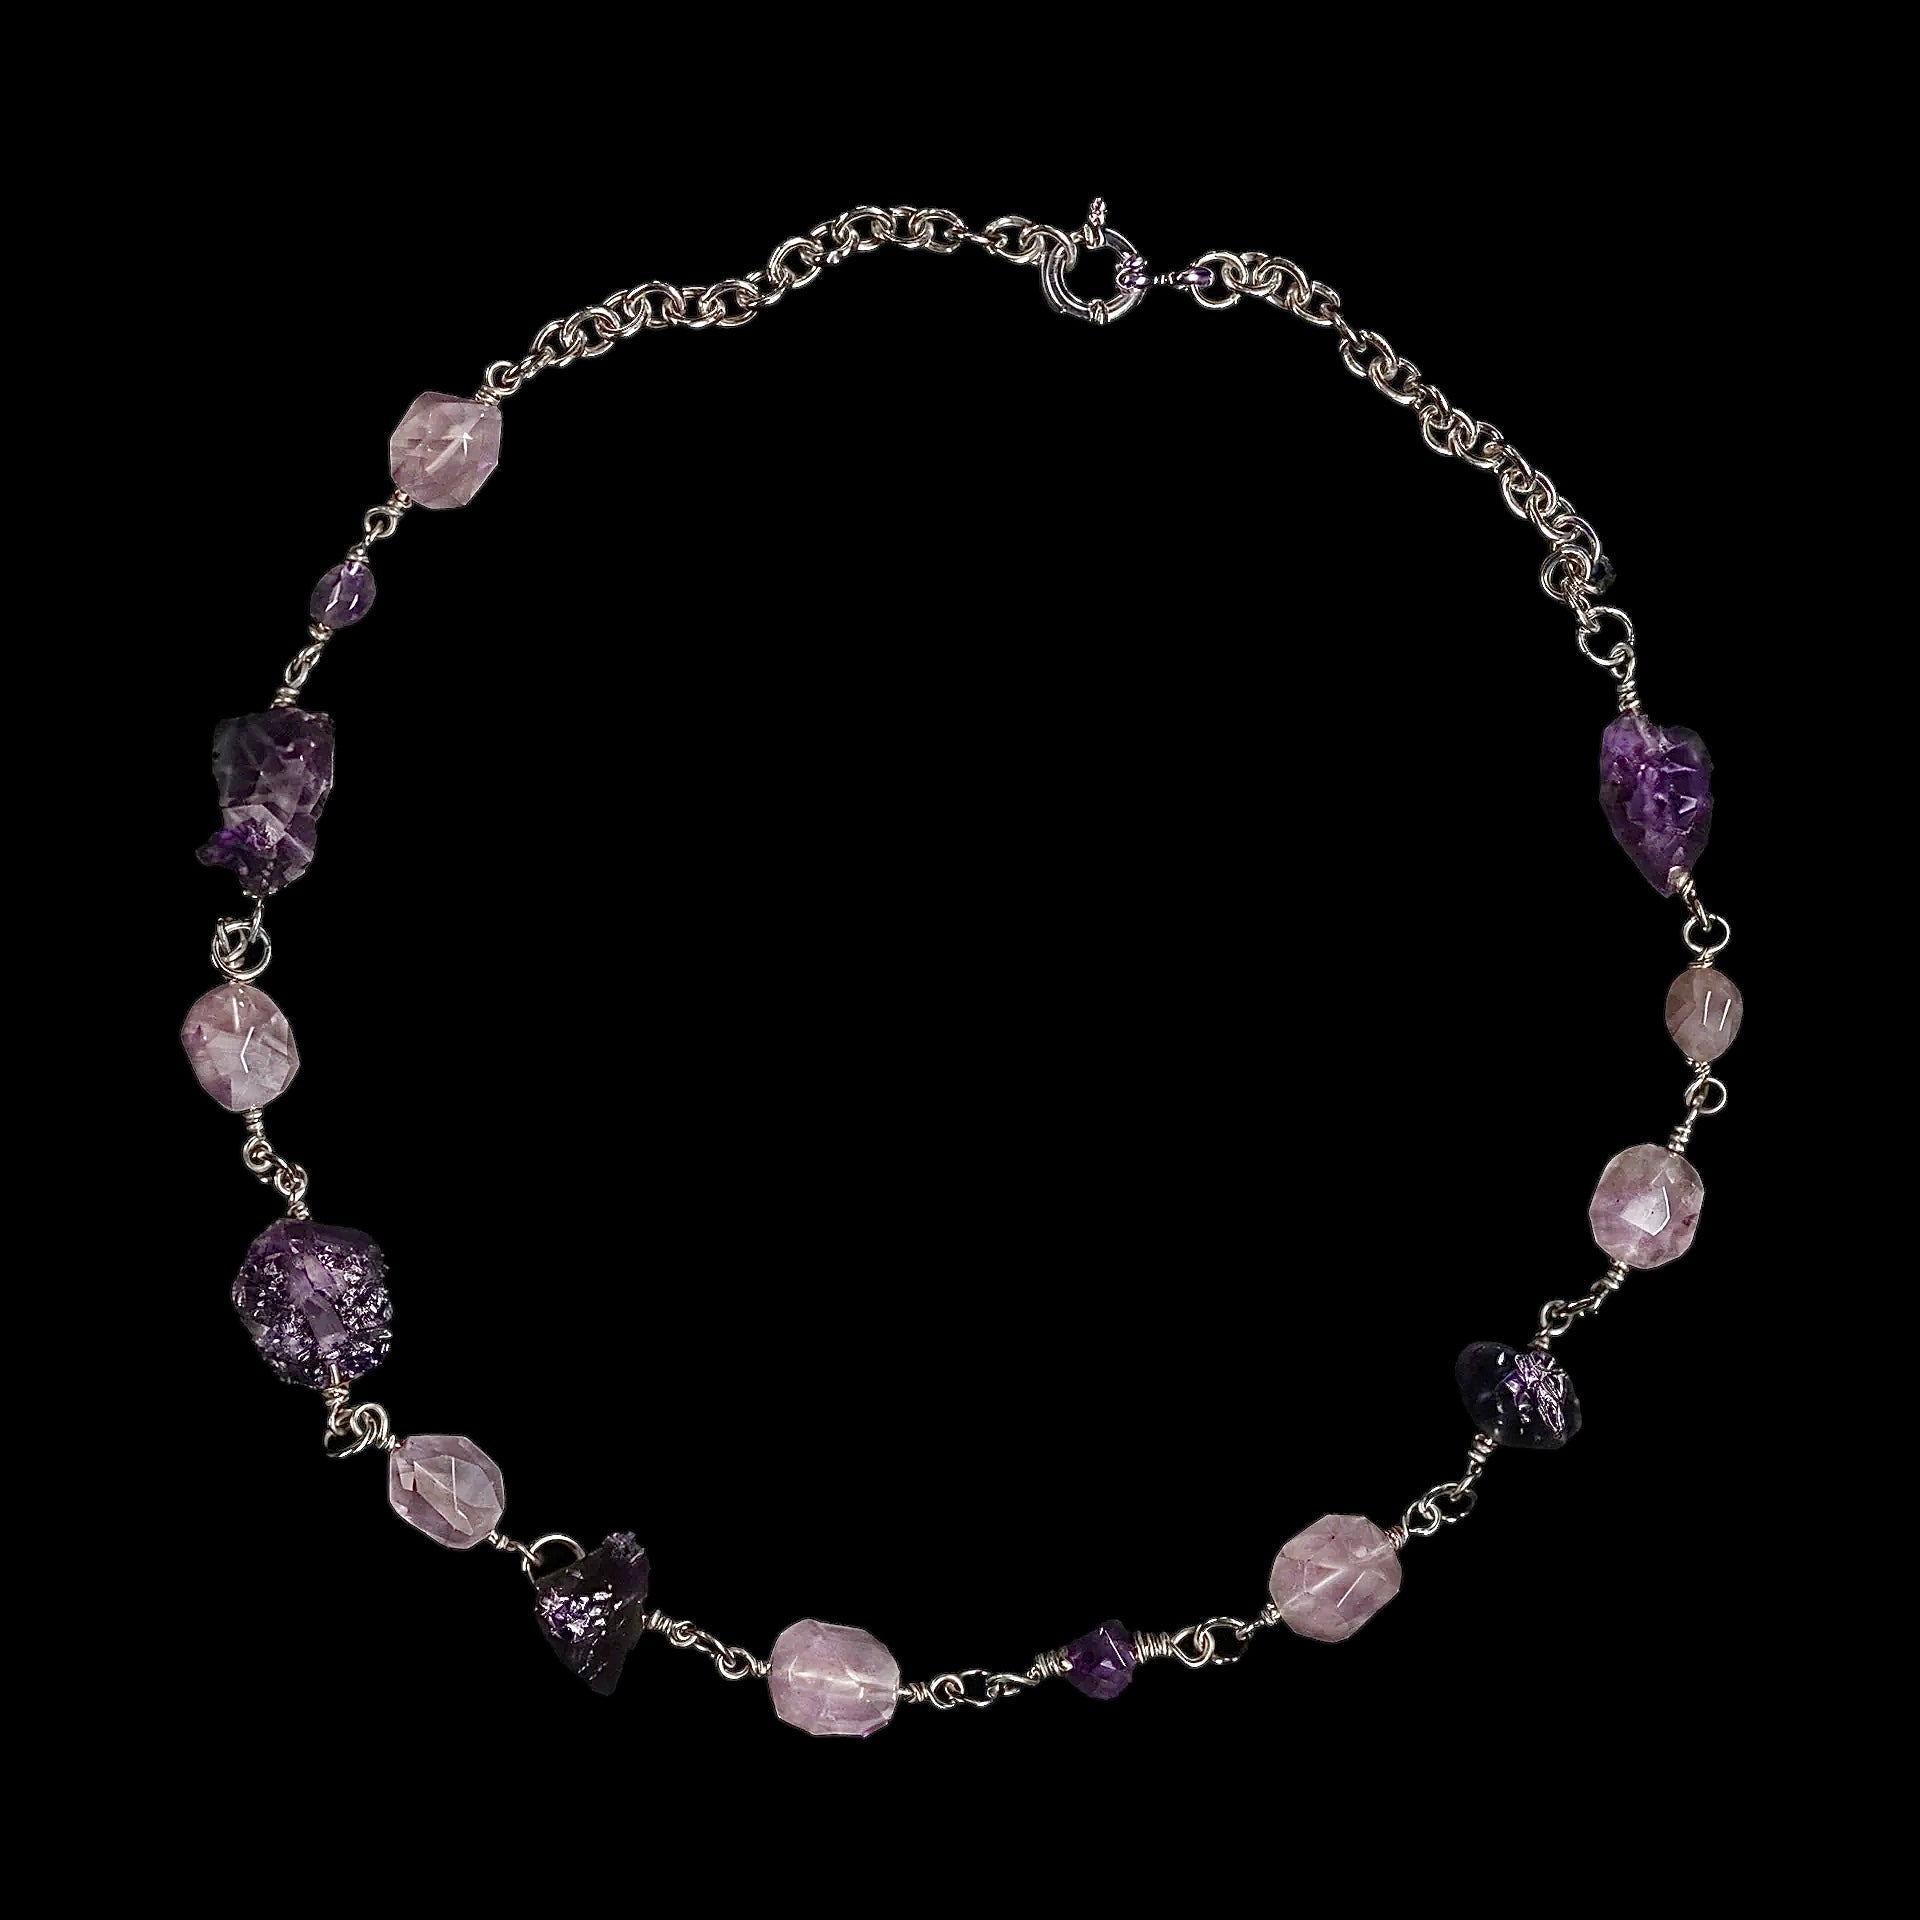 Custom Luxury Necklace with Precious Gemstones and Freshwater Pearls - SURREALIUM